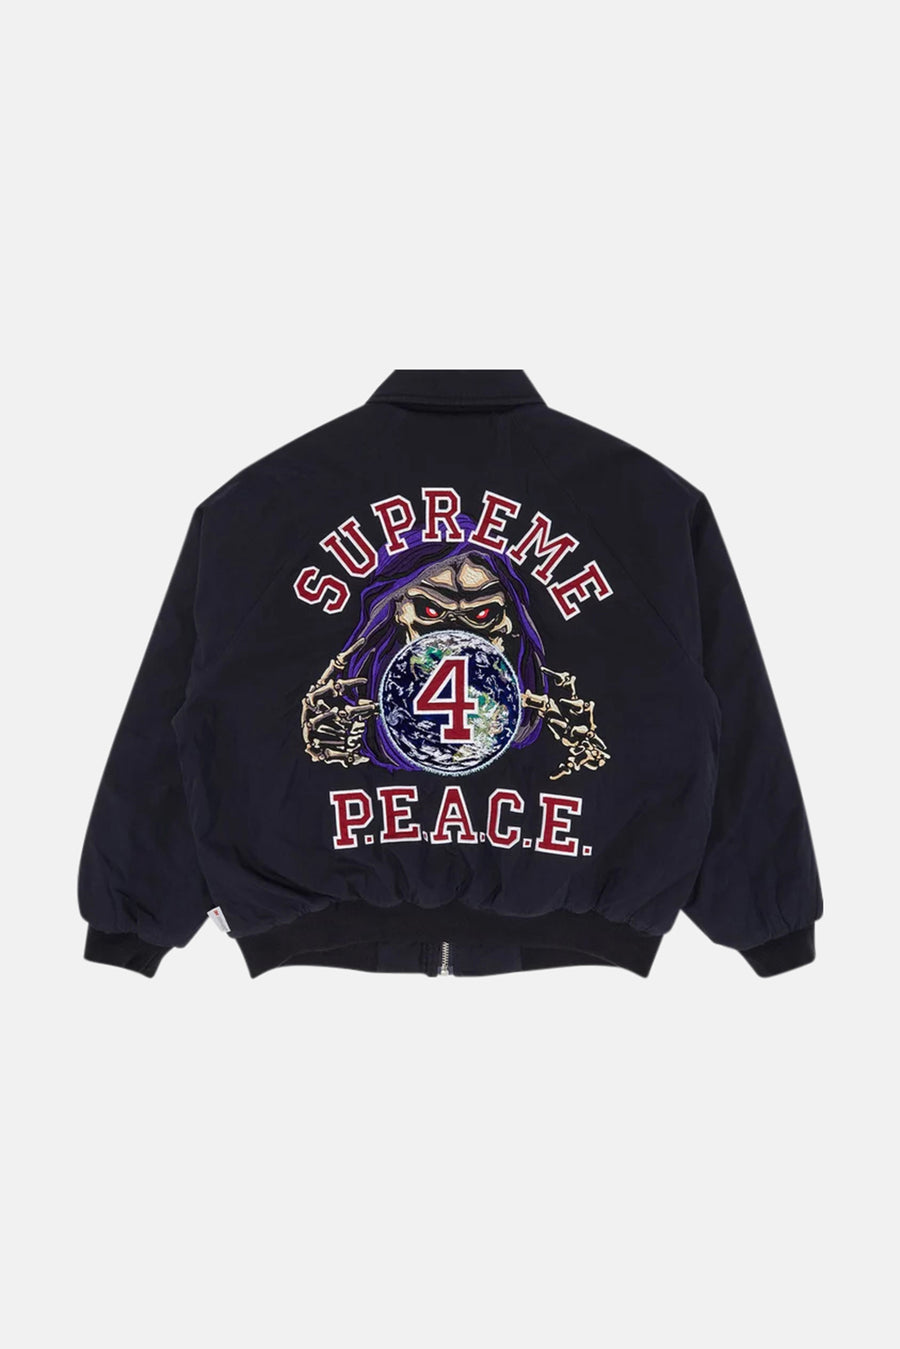 Peace Embroidered Work Jacket BLACK  葵産業ボックスロゴ